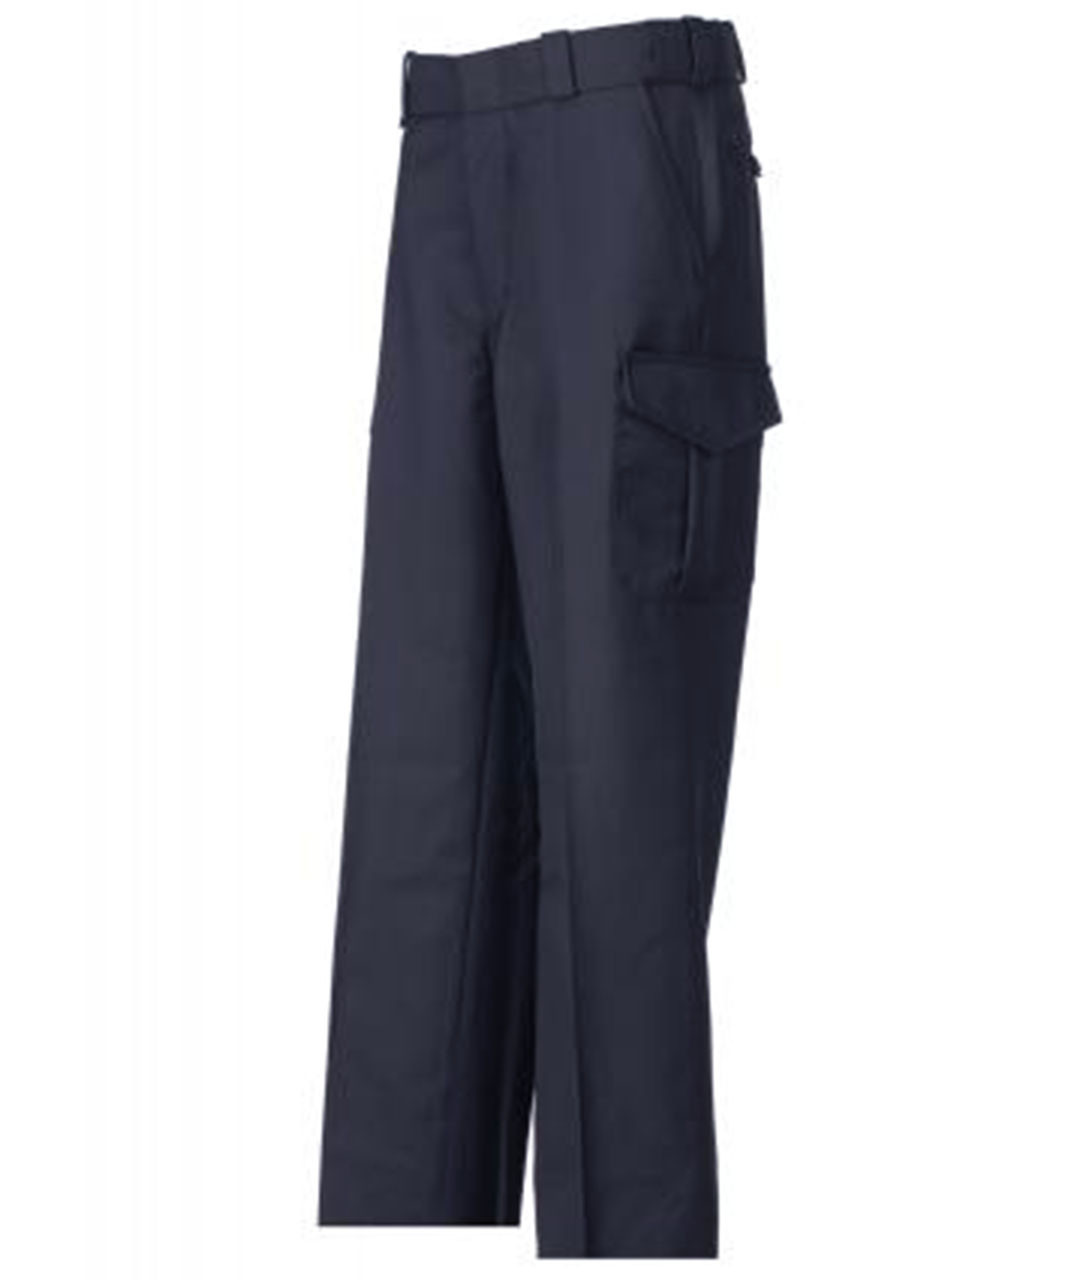 Spiewak SPDU29 Poly Wool External Men's Cargo Duty Trousers, Uniform, Strechable Waist, available in Dark Navy Blue, Black, and Brown